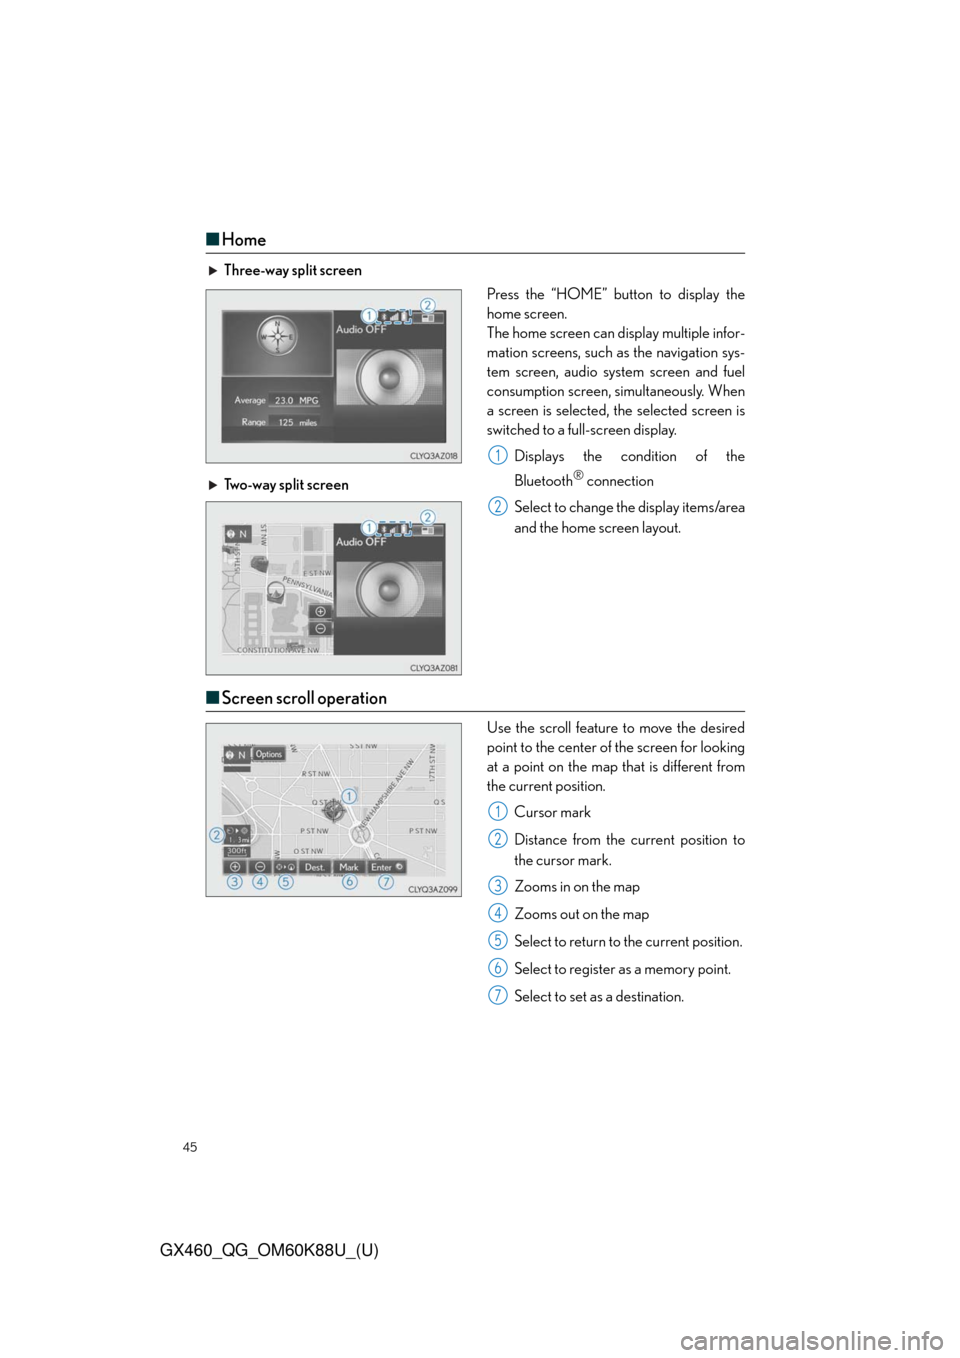 Lexus GX460 2014  Key information / LEXUS 2014 GX460 QUICK GUIDE  (OM60K88U) Service Manual 45
GX460_QG_OM60K88U_(U)
■Home
Three-way split screen
Press the “HOME” button to display the
home screen.
The home screen can display multiple infor-
mation screens, such as the navigation sys-
